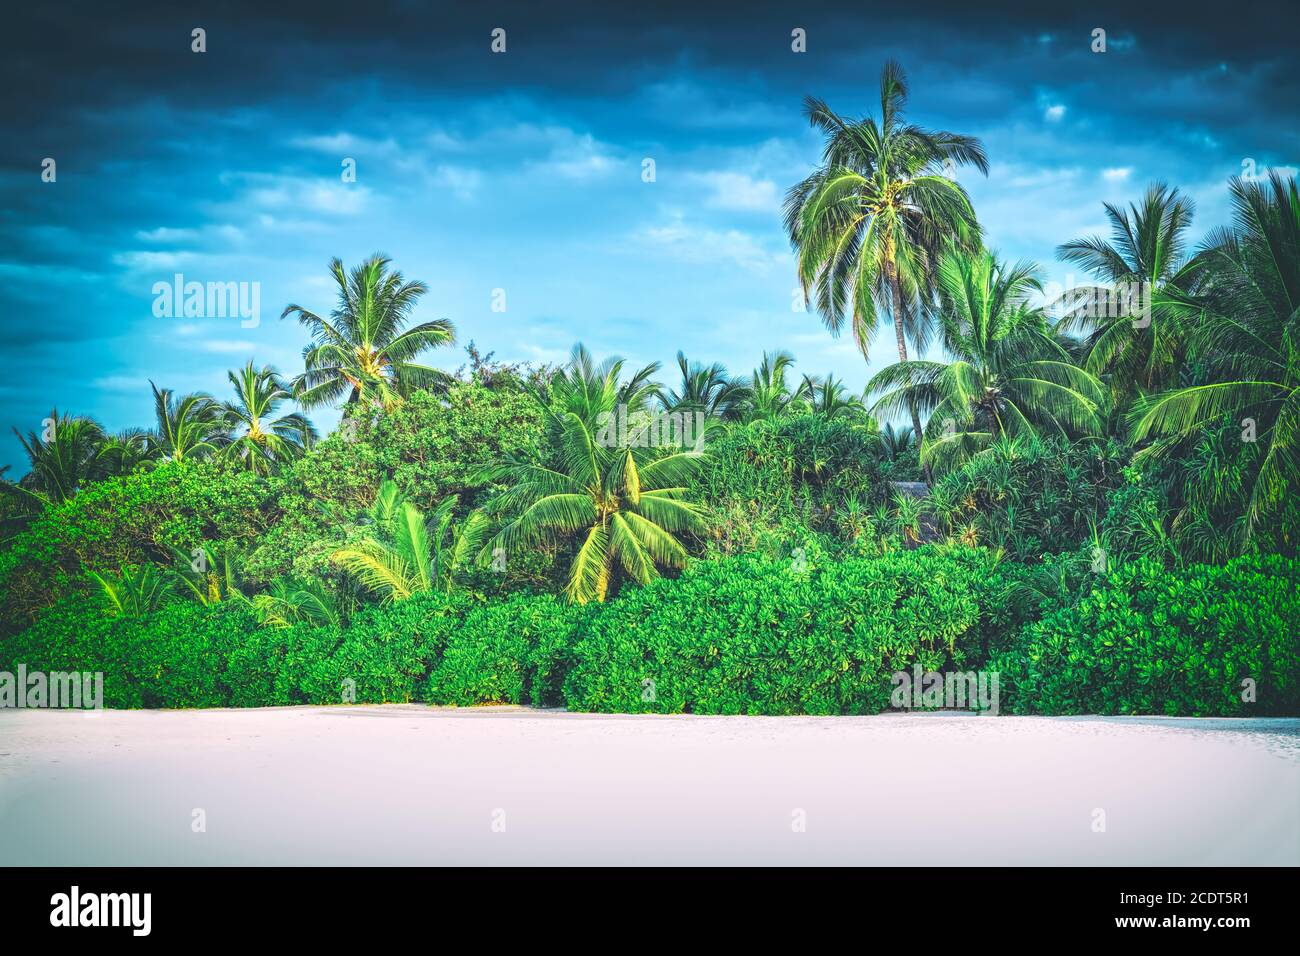 Retro stylized image of tropical island with coconut palm trees. Maldives Stock Photo